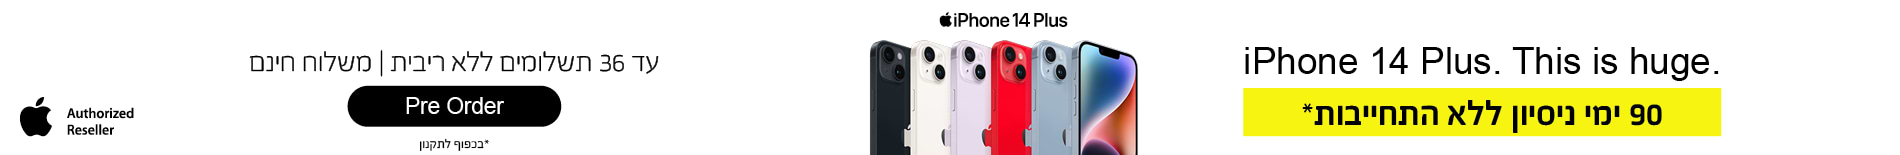 Apple iPhone 12 Plus Pre Order